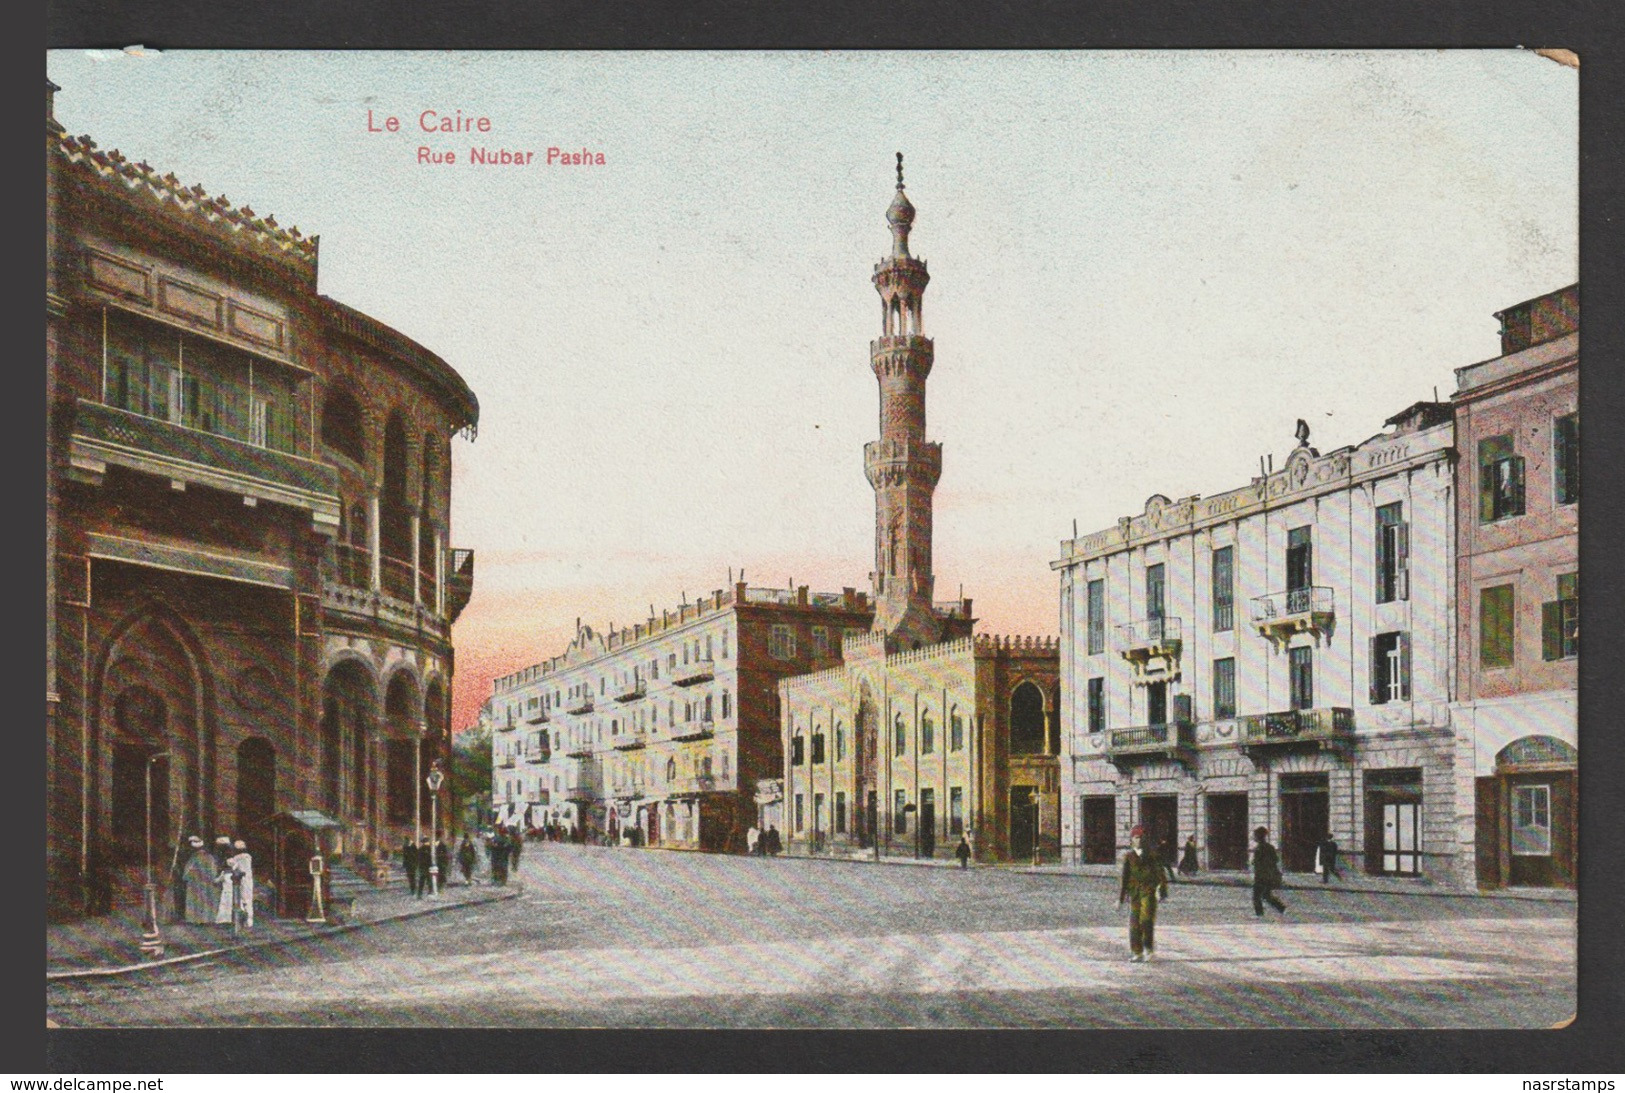 Egypt - Very Rare - Vintage Post Card - Nubar Pasha Street - Cairo - 1866-1914 Ägypten Khediva